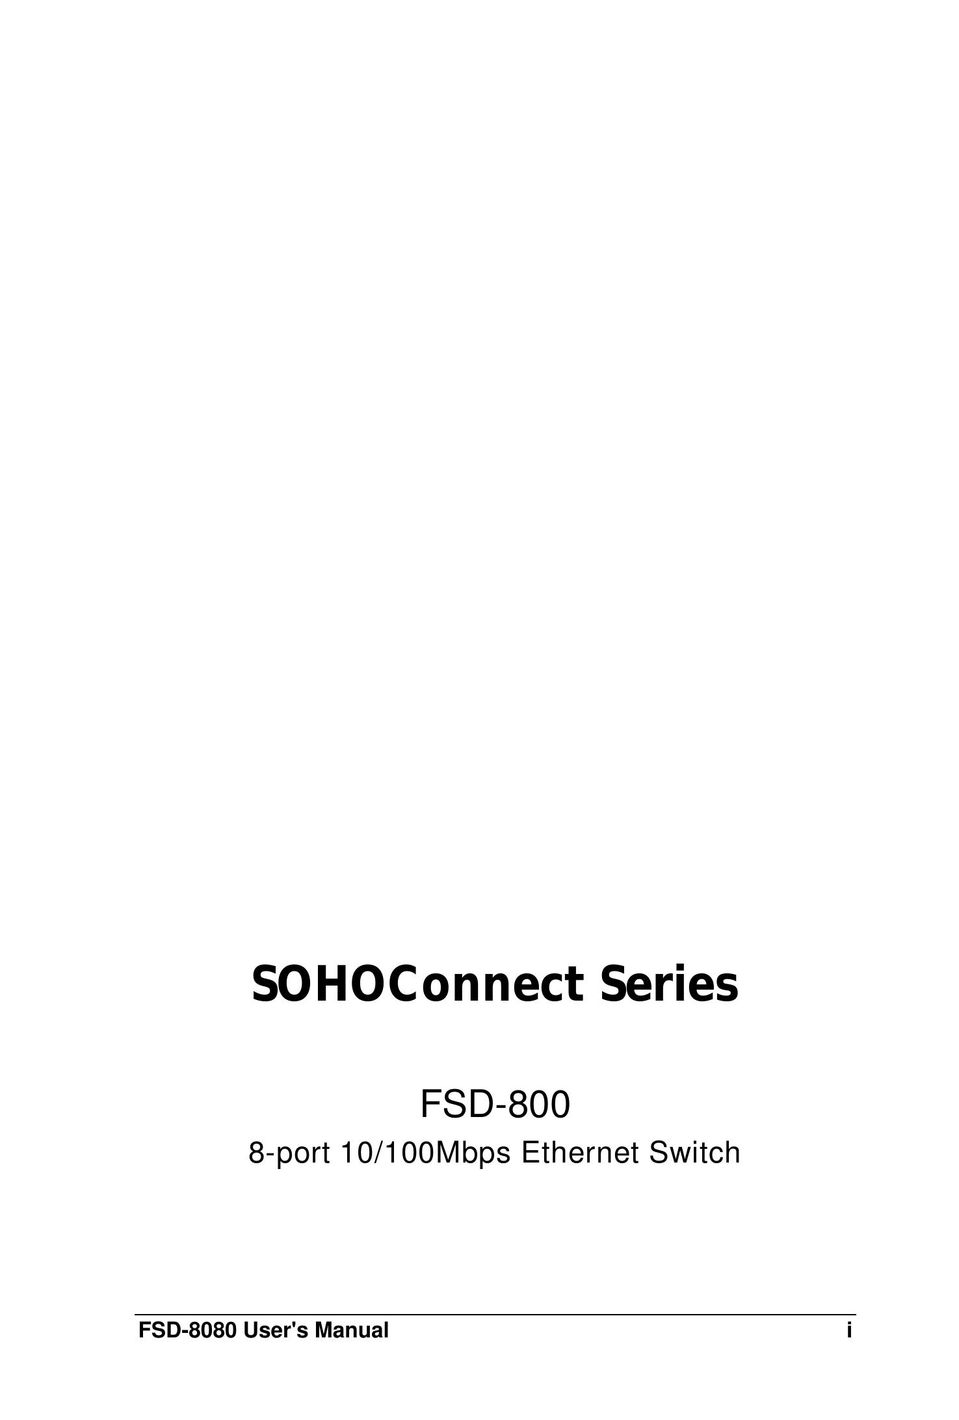 Soho FSD-800 Switch User Manual